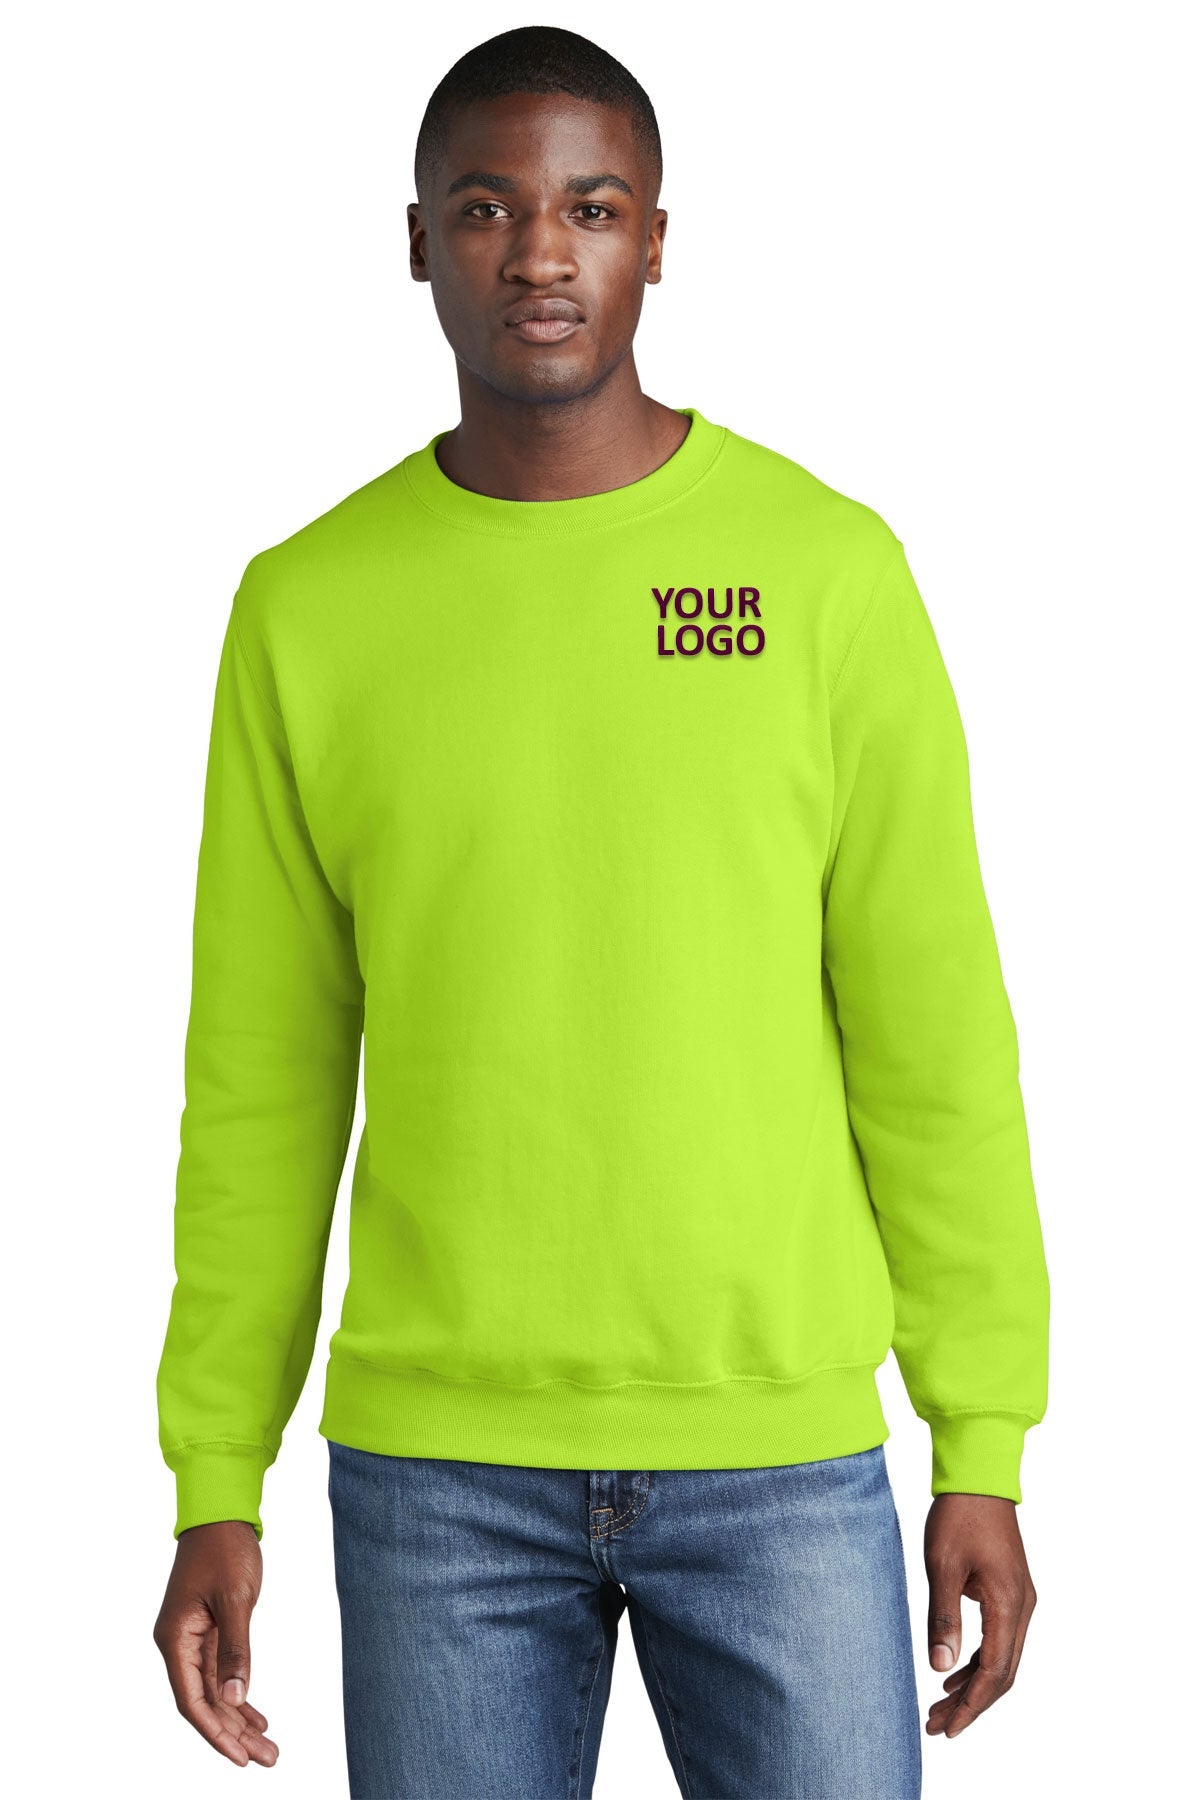 port & company neon yellow pc78 company sweatshirts embroidered